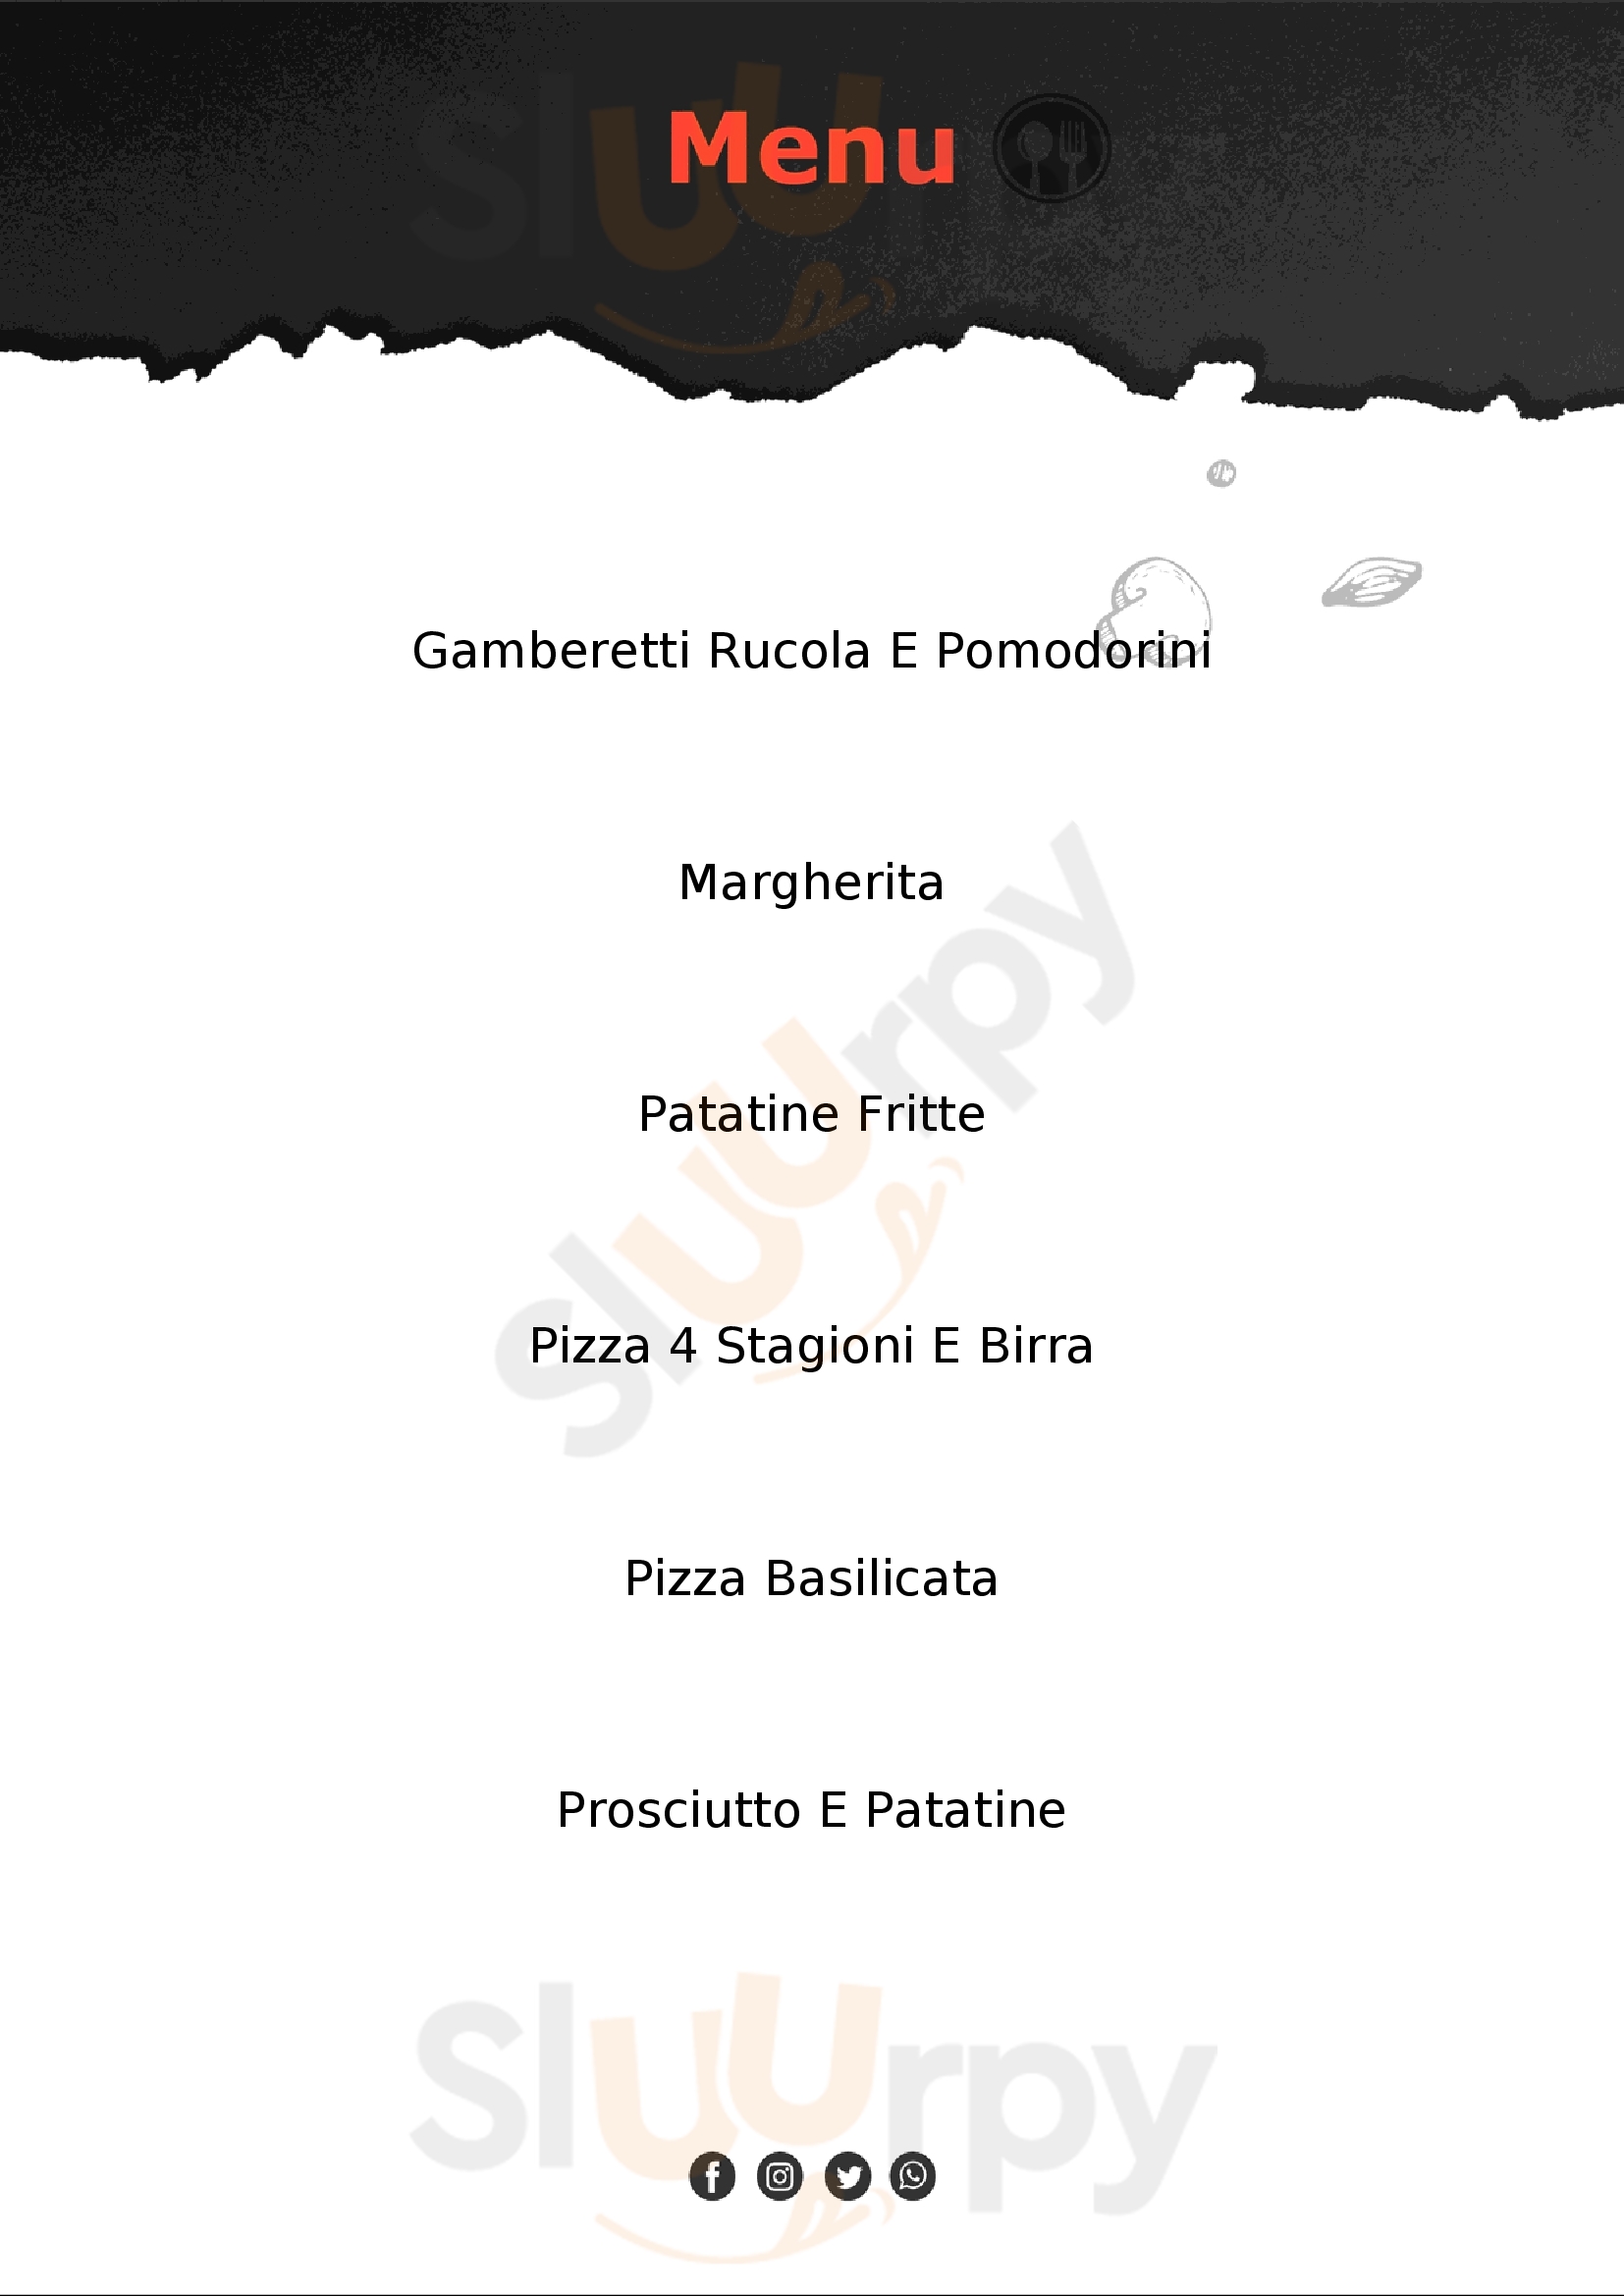 Delo's Pizza & Street Food Vittuone menù 1 pagina